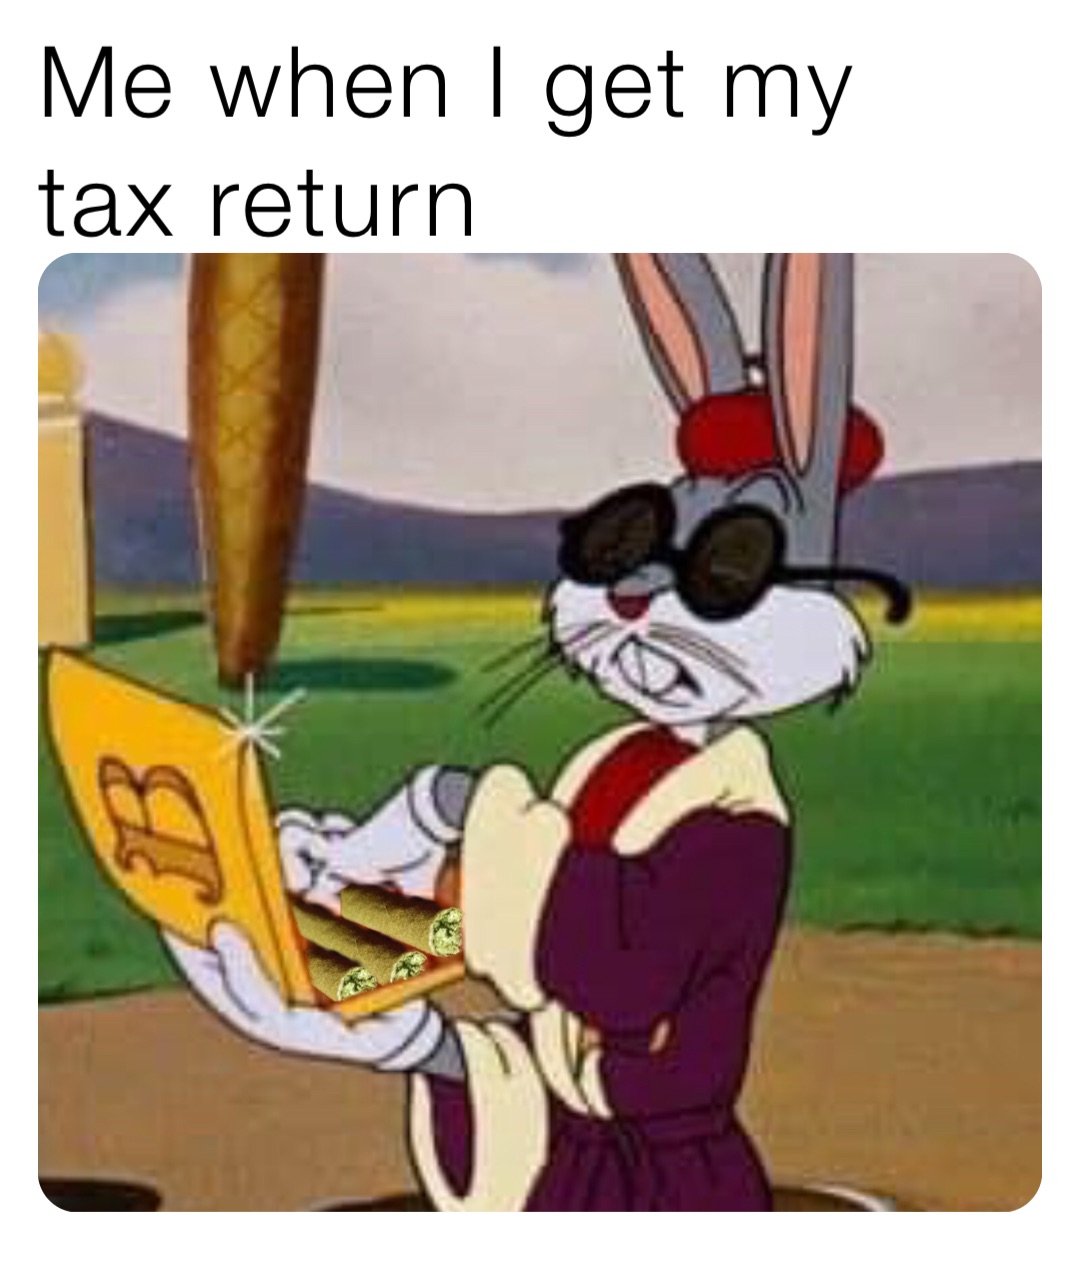 Me when I get my tax return